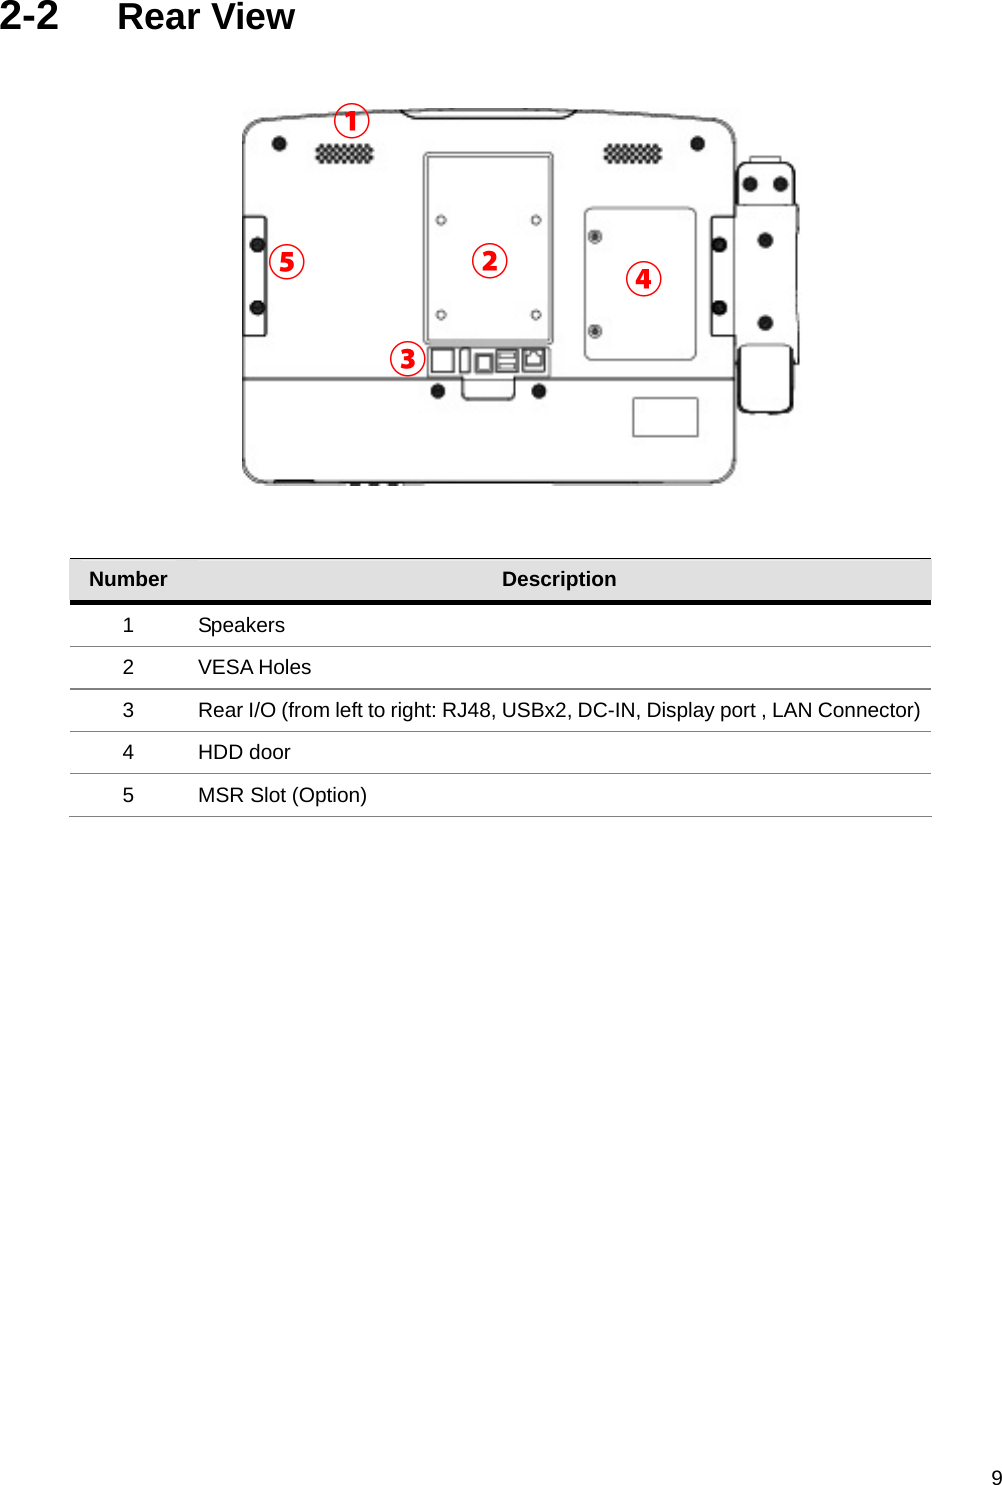  92-2  Rear View                    Number  Description 1 Speakers 2 VESA Holes 3  Rear I/O (from left to right: RJ48, USBx2, DC-IN, Display port , LAN Connector)4 HDD door 5  MSR Slot (Option)              ① ② ③ ④ ⑤ 